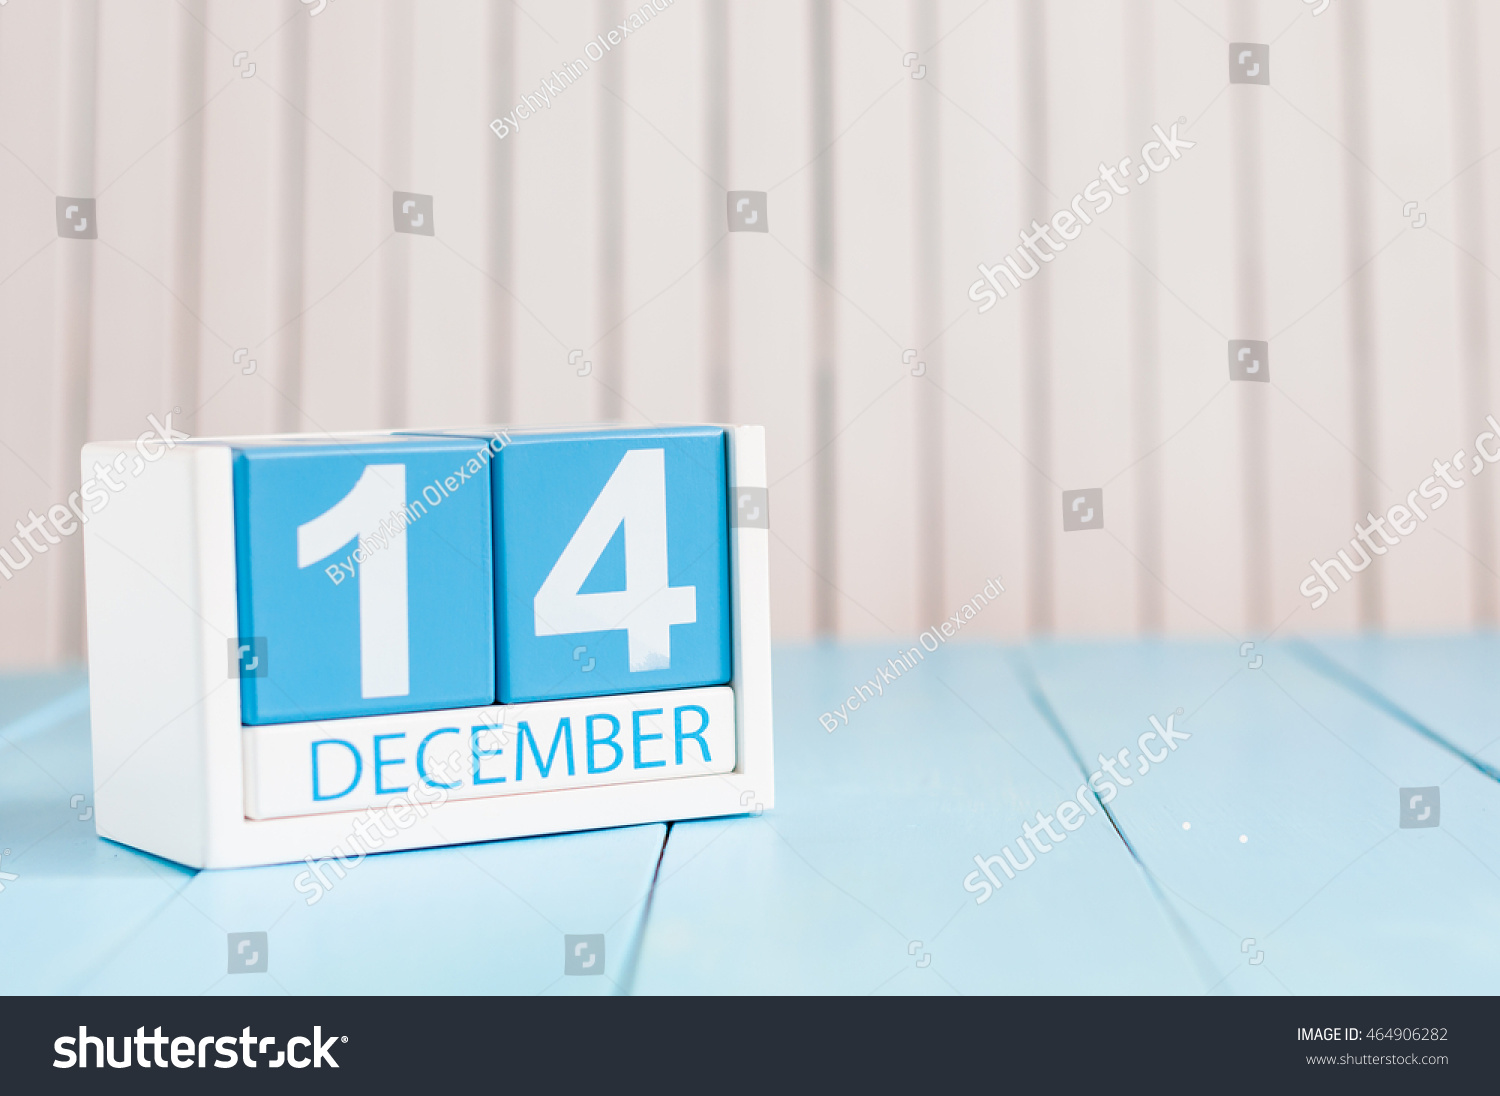 December 14th Day 14 Month Calendar Stock Photo 464906282 Shutterstock